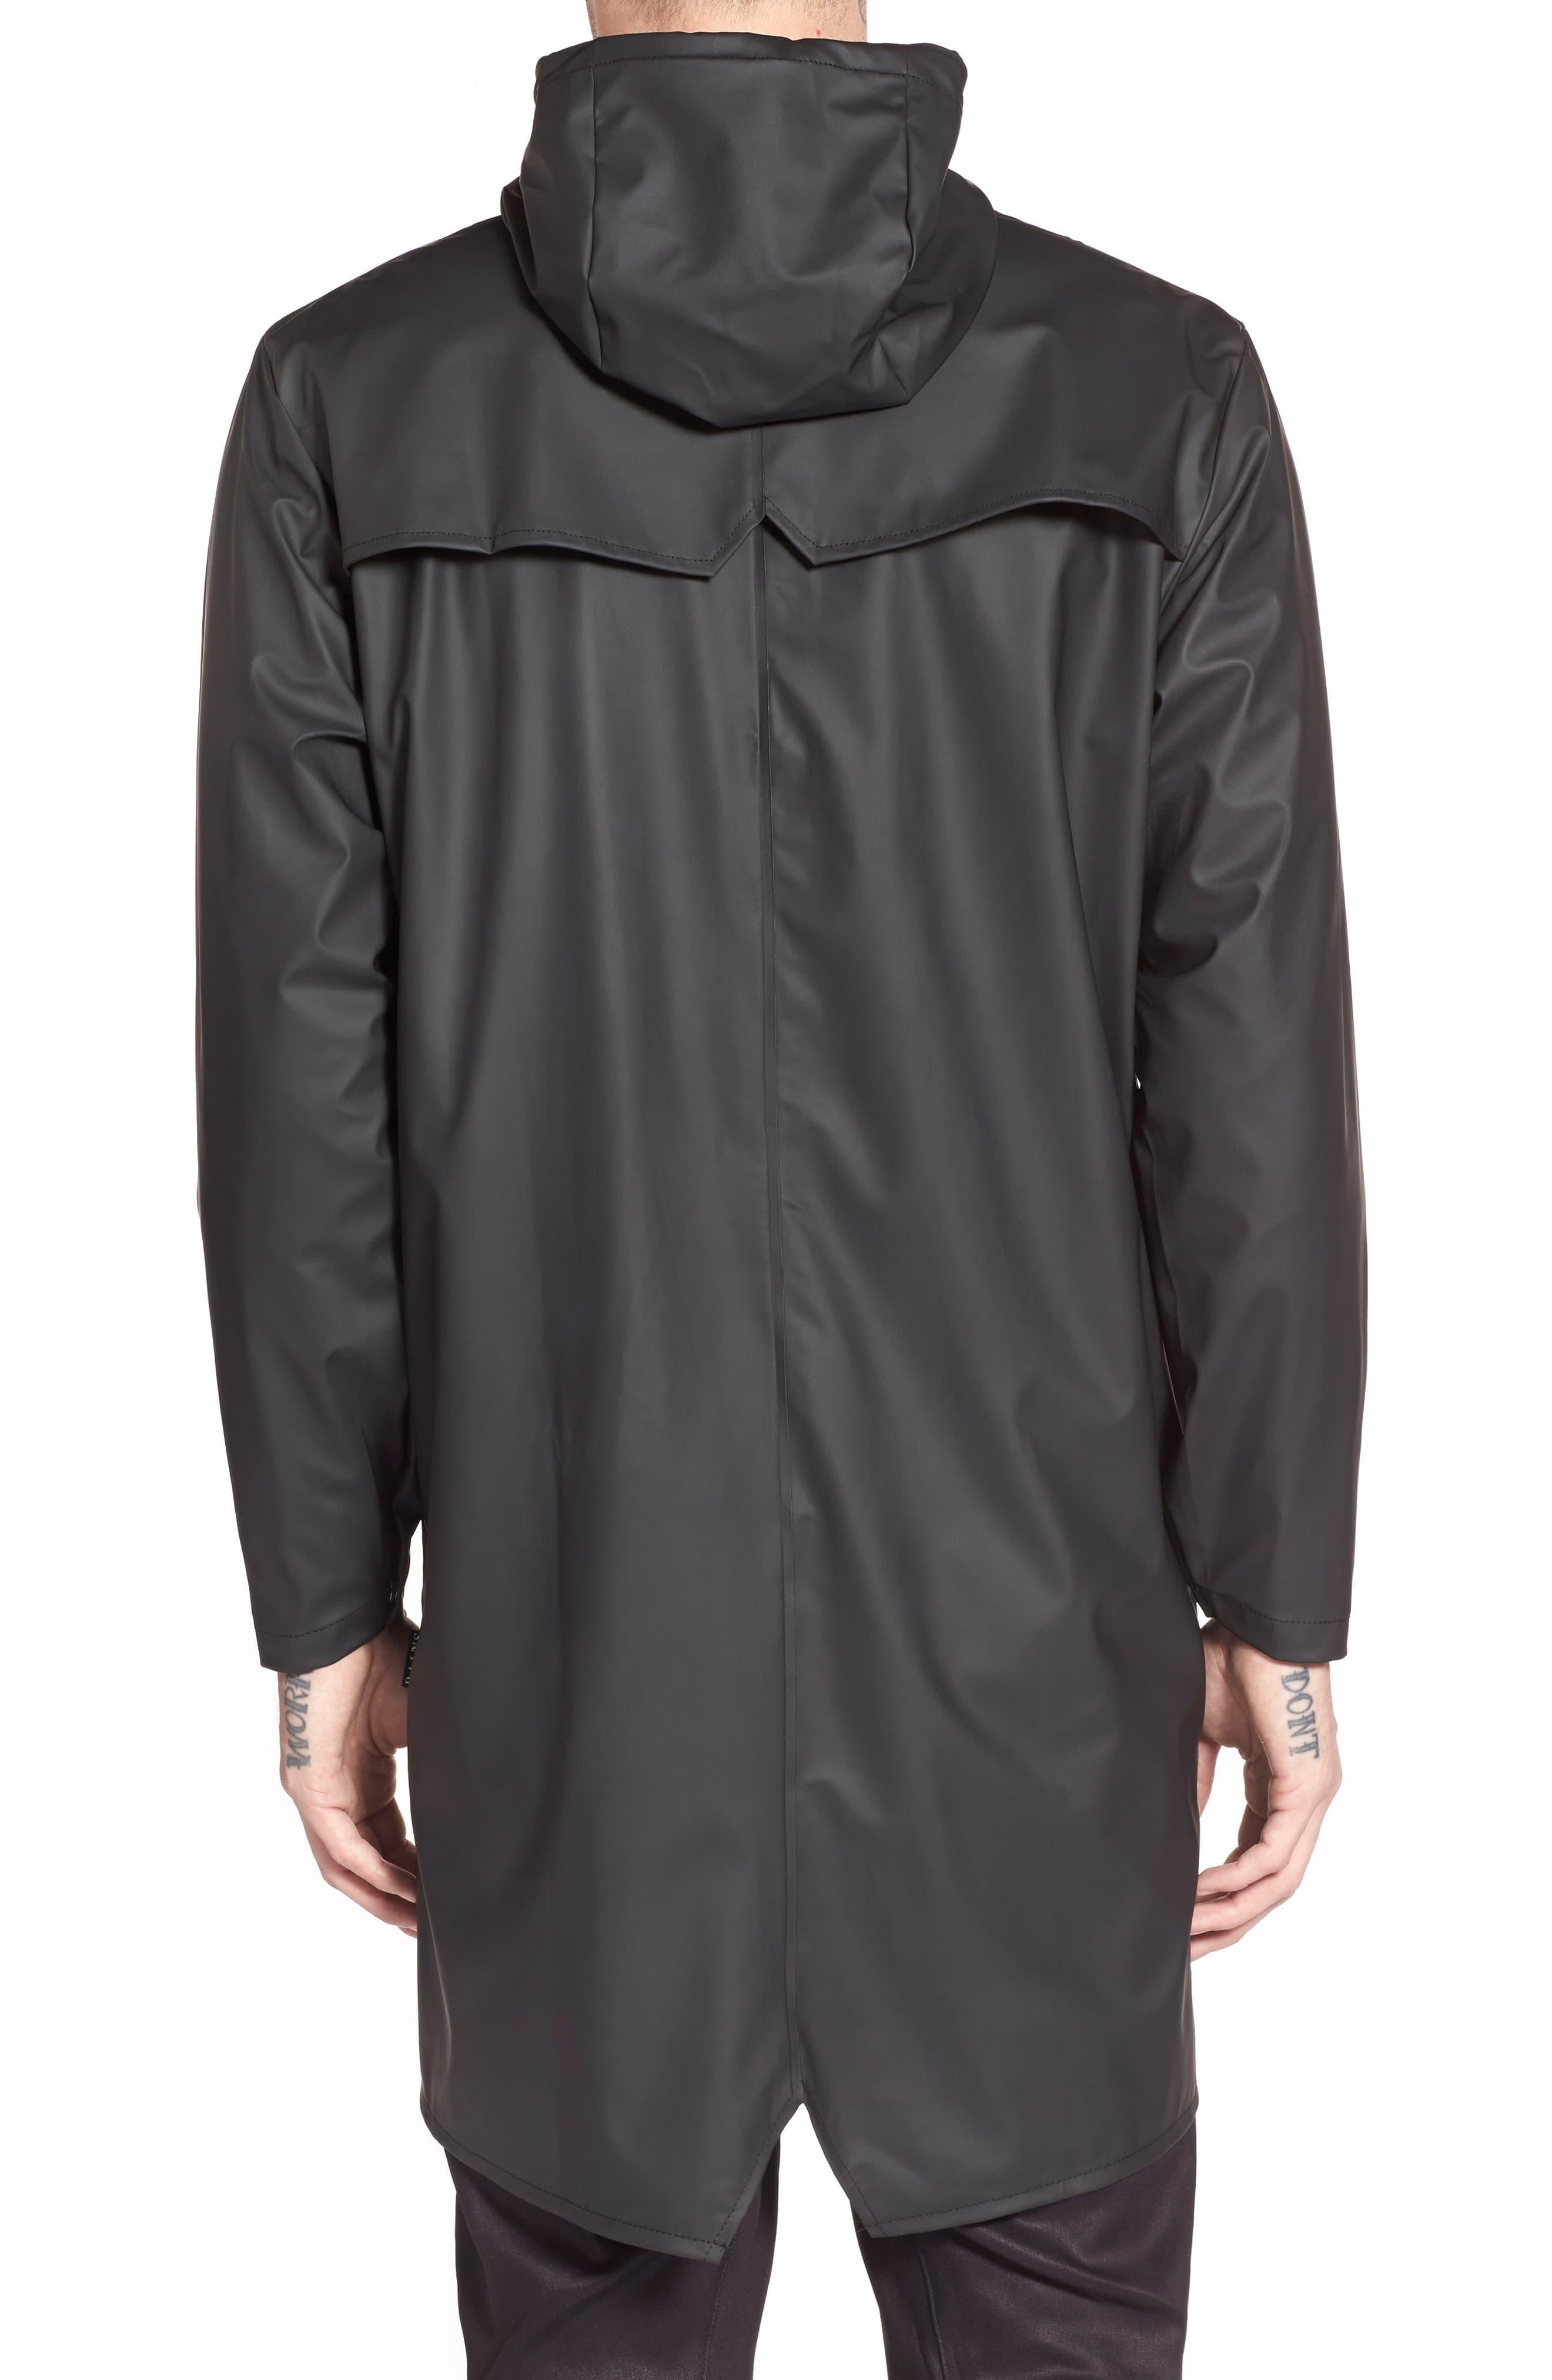 Rains Waterproof Hooded Long Rain Jacket in Black for Men - Lyst